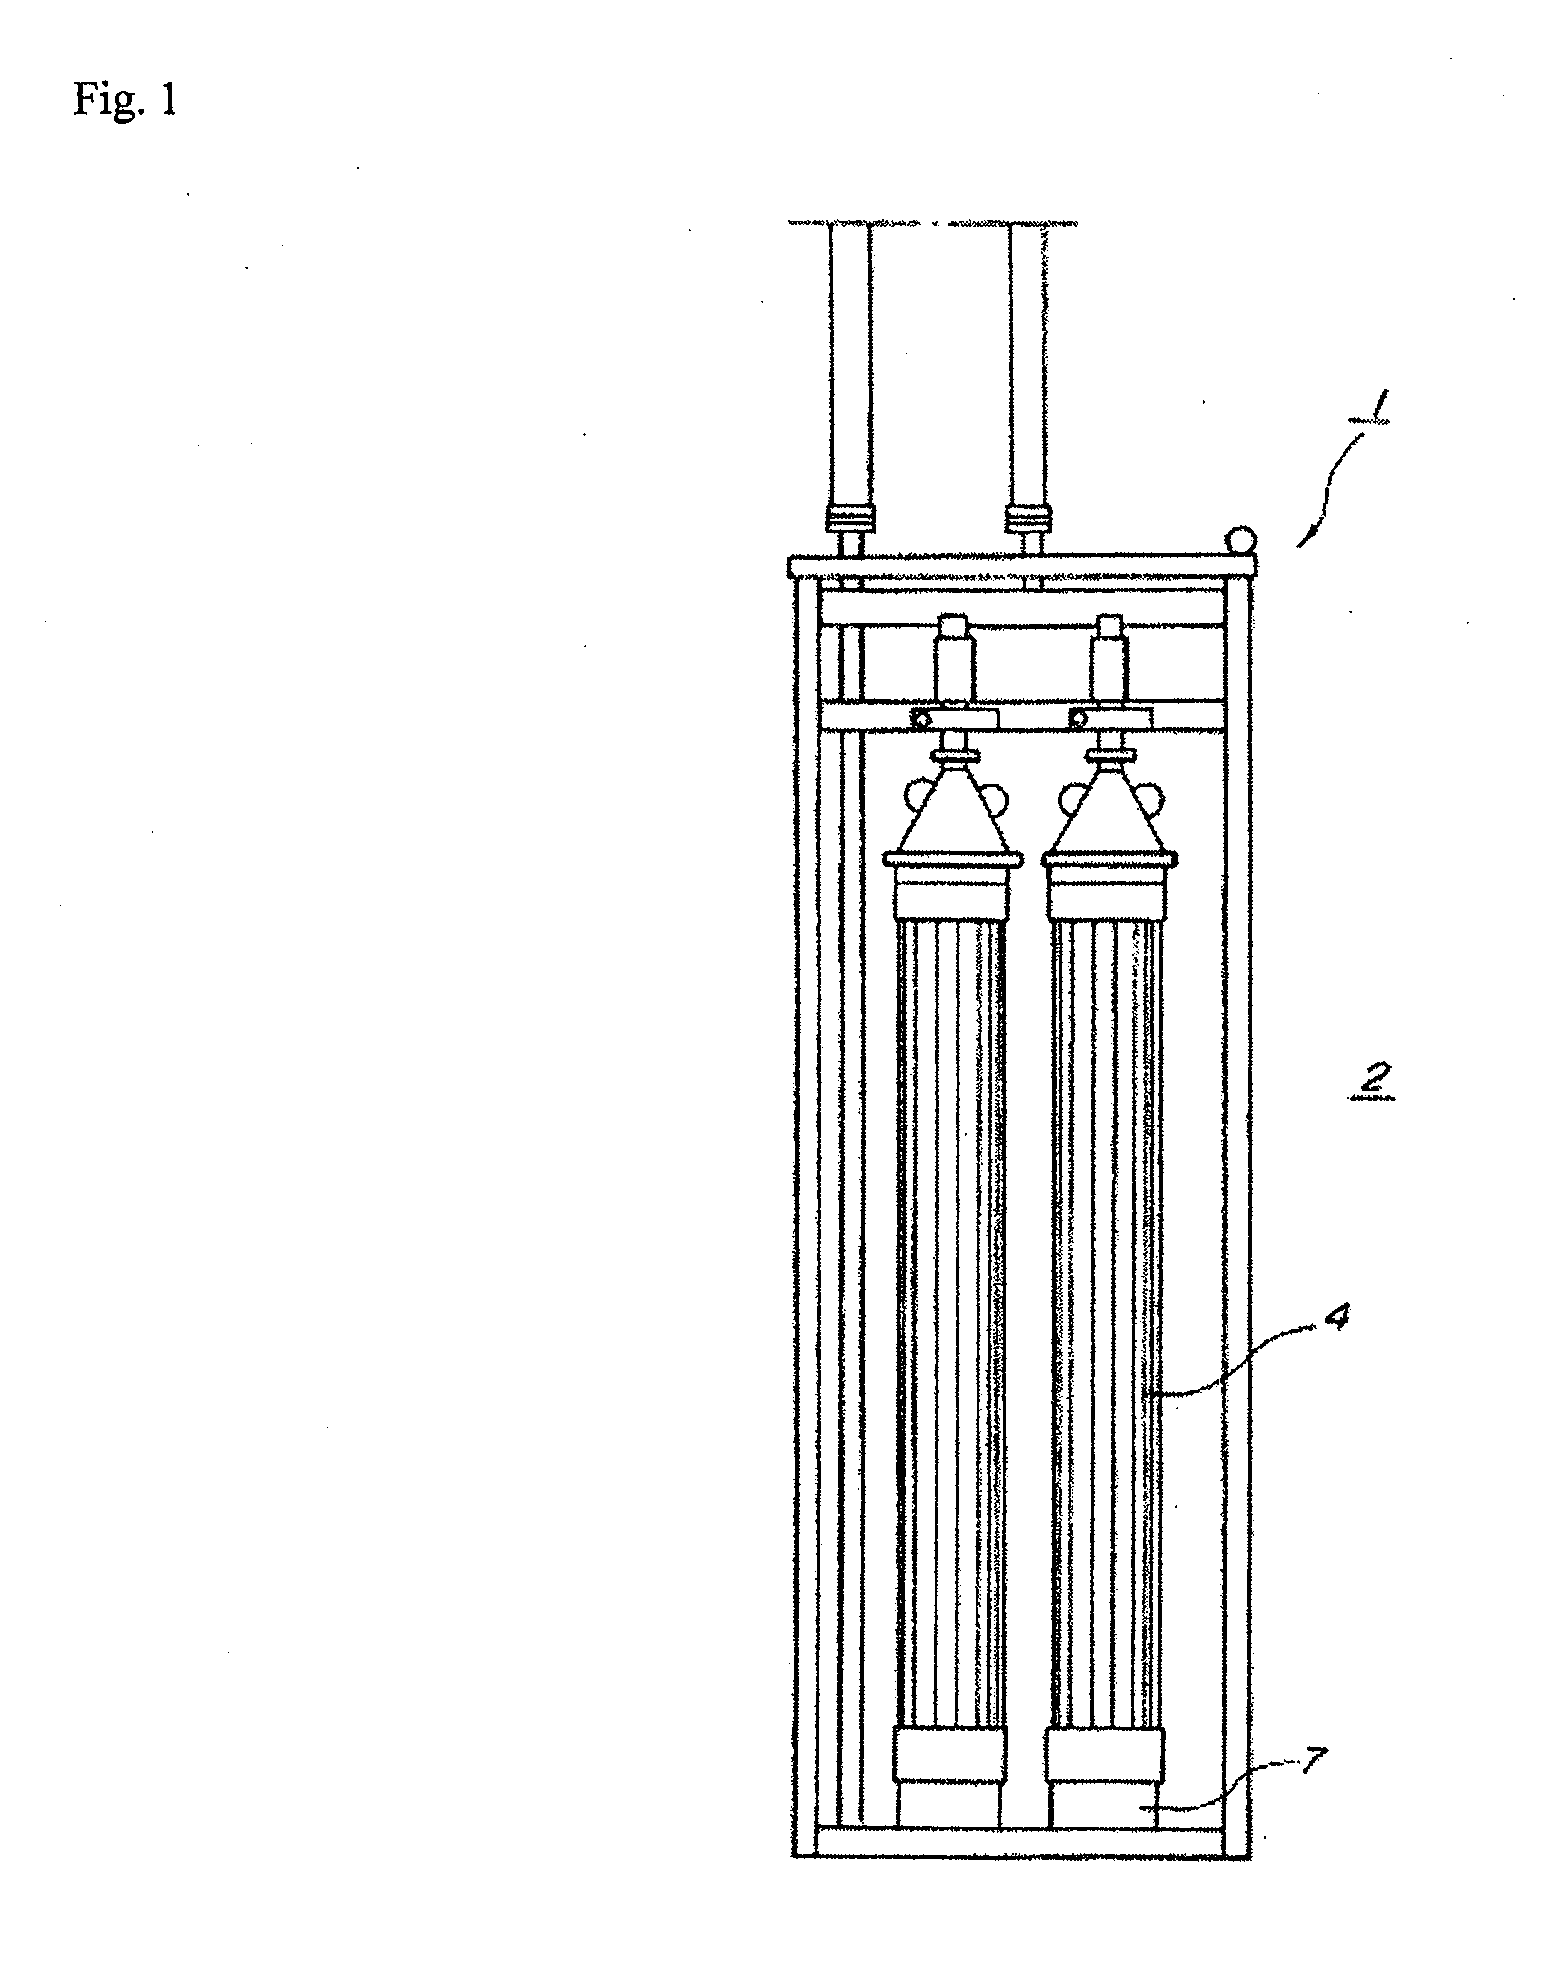 Intermittent gas flow apparatus and membrane separation apparatus